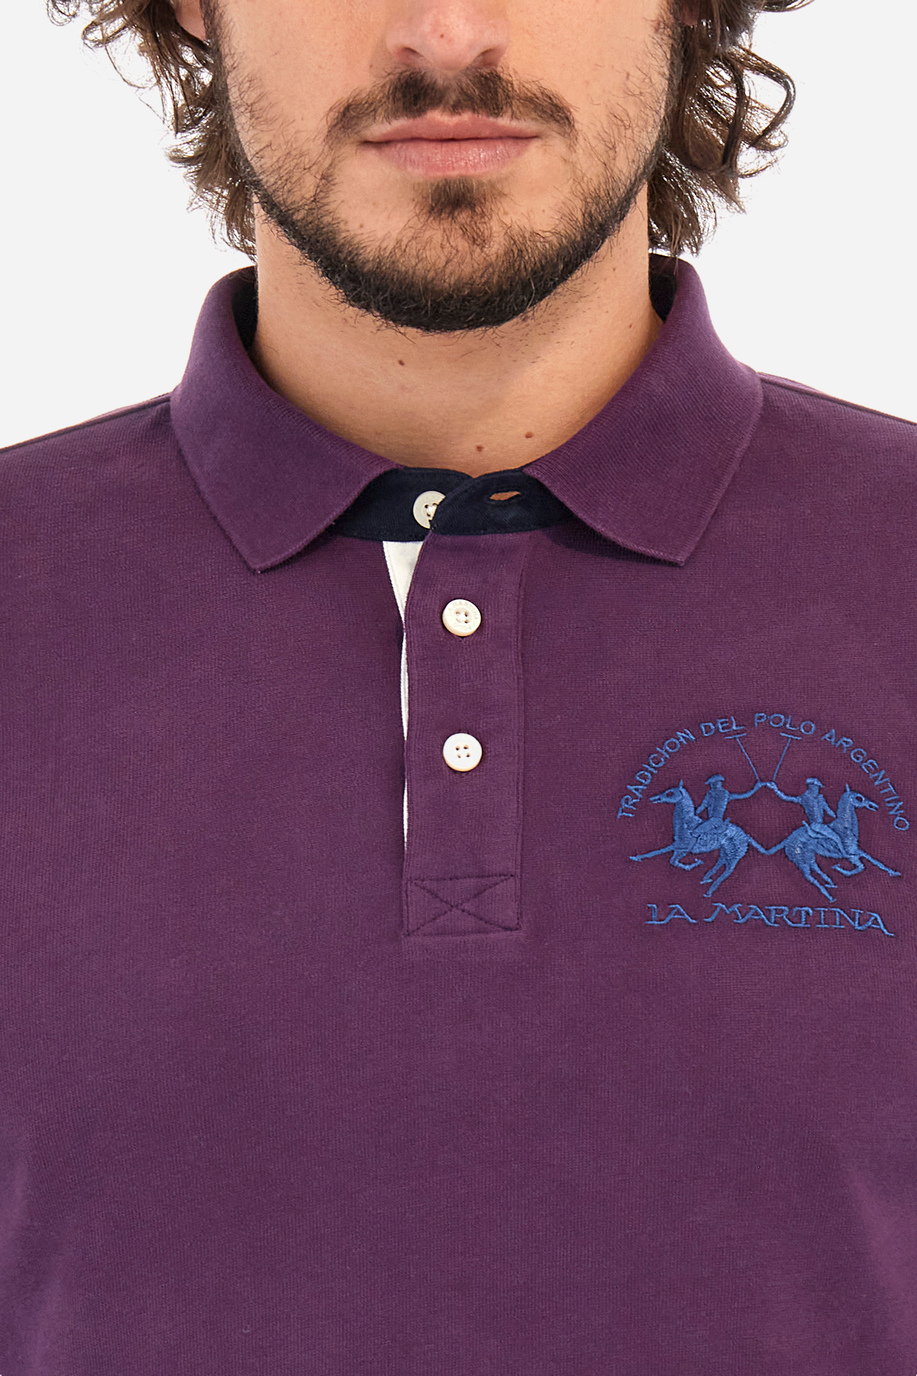 Herren -Poloshirt regular fit - Wilfredo - Klassische Basics | La Martina - Official Online Shop